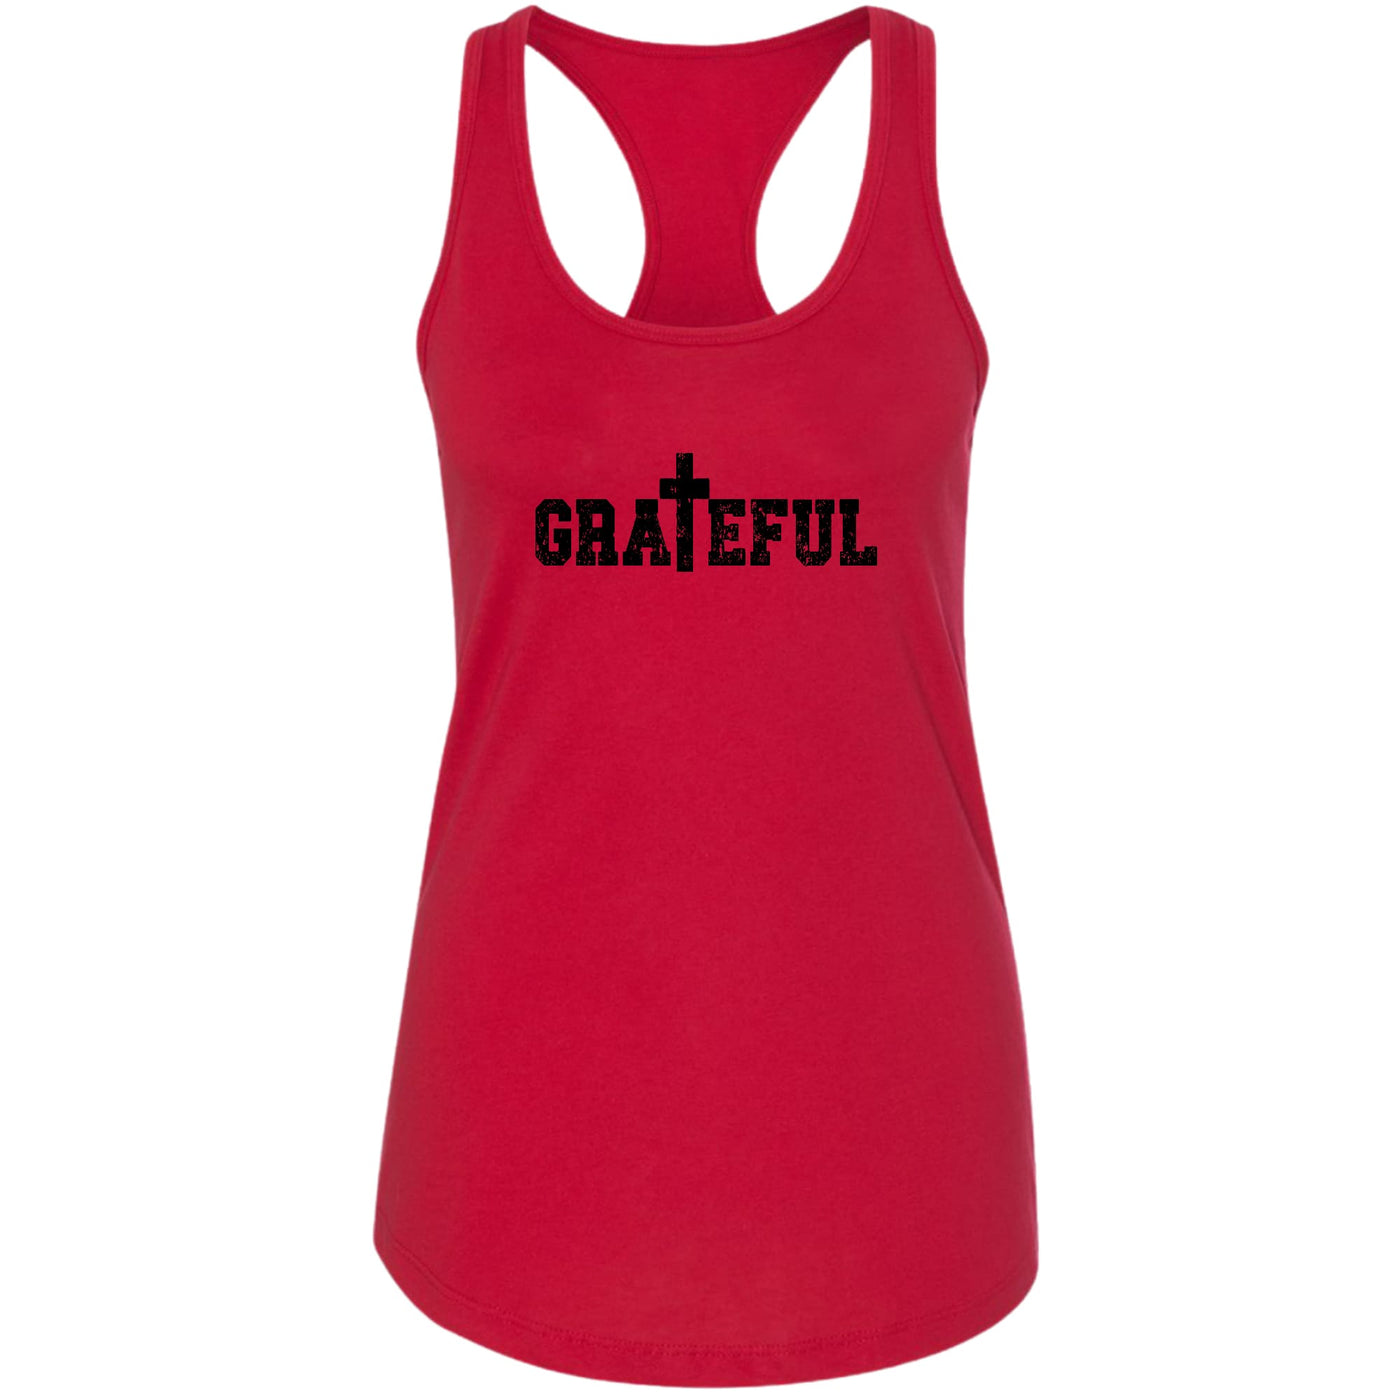 Womens Tank Top Fitness T - shirt Grateful Print - Tops